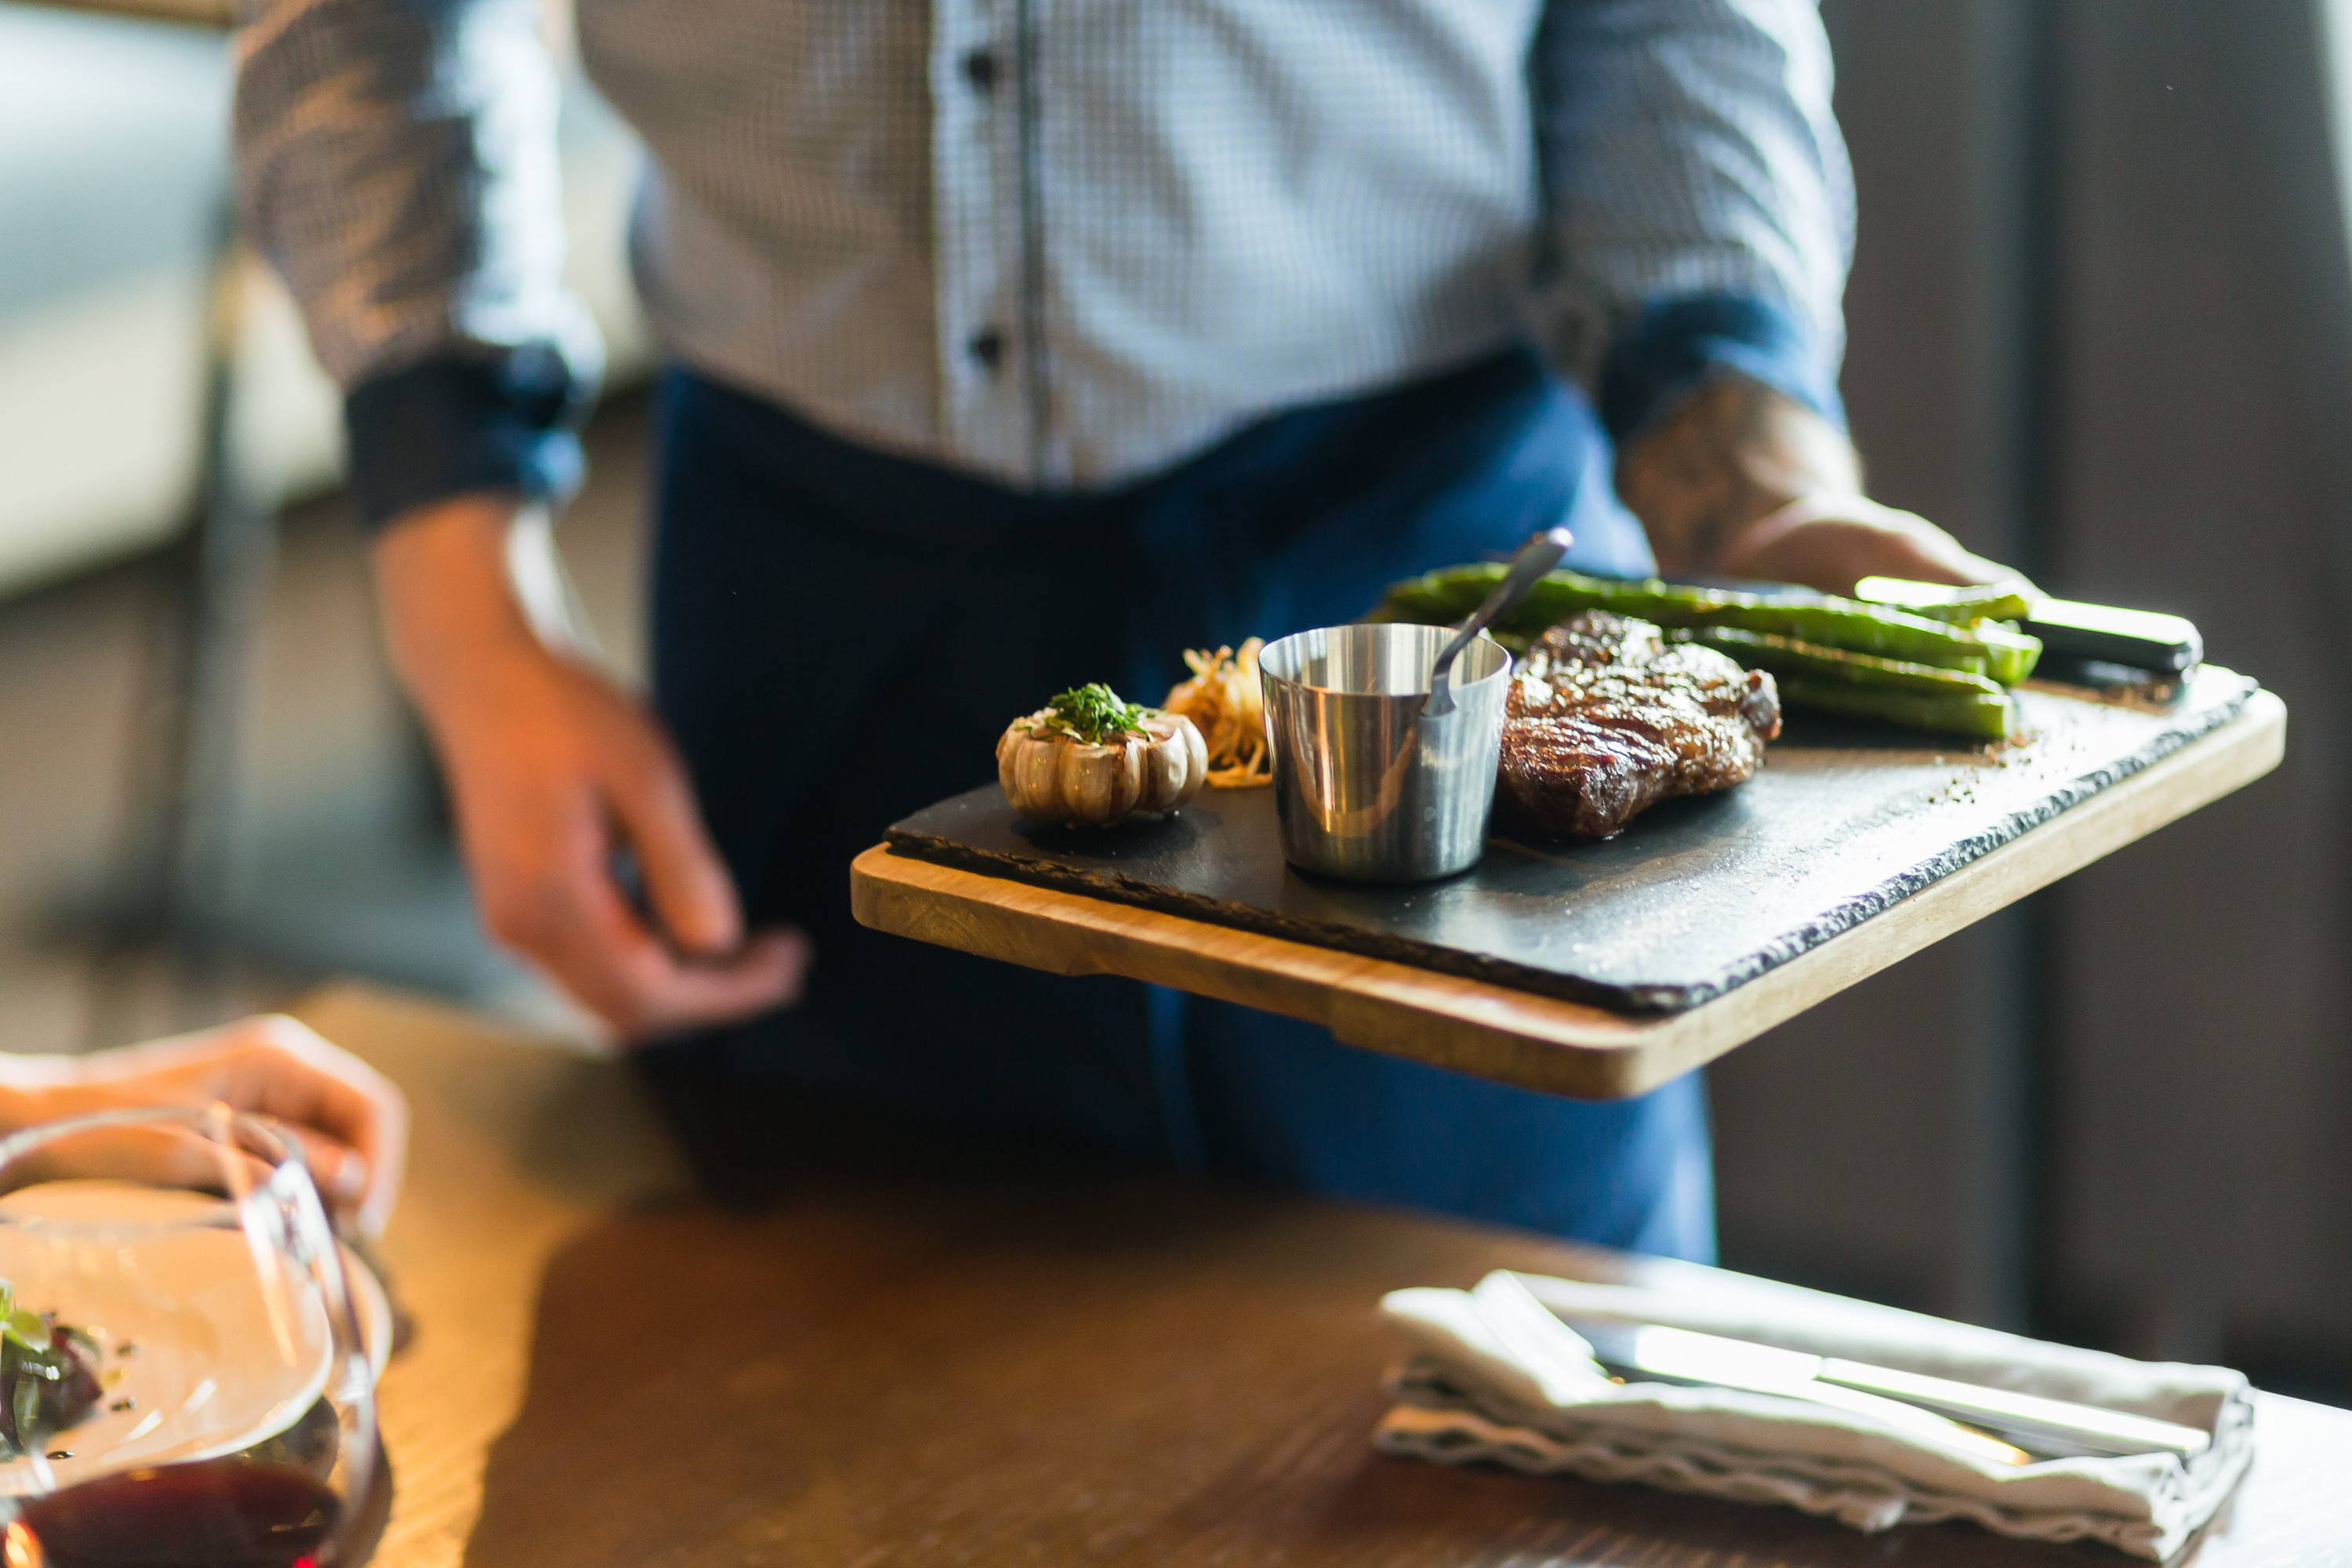 Server in sharp uniform serves beautifully plated dish on slate board